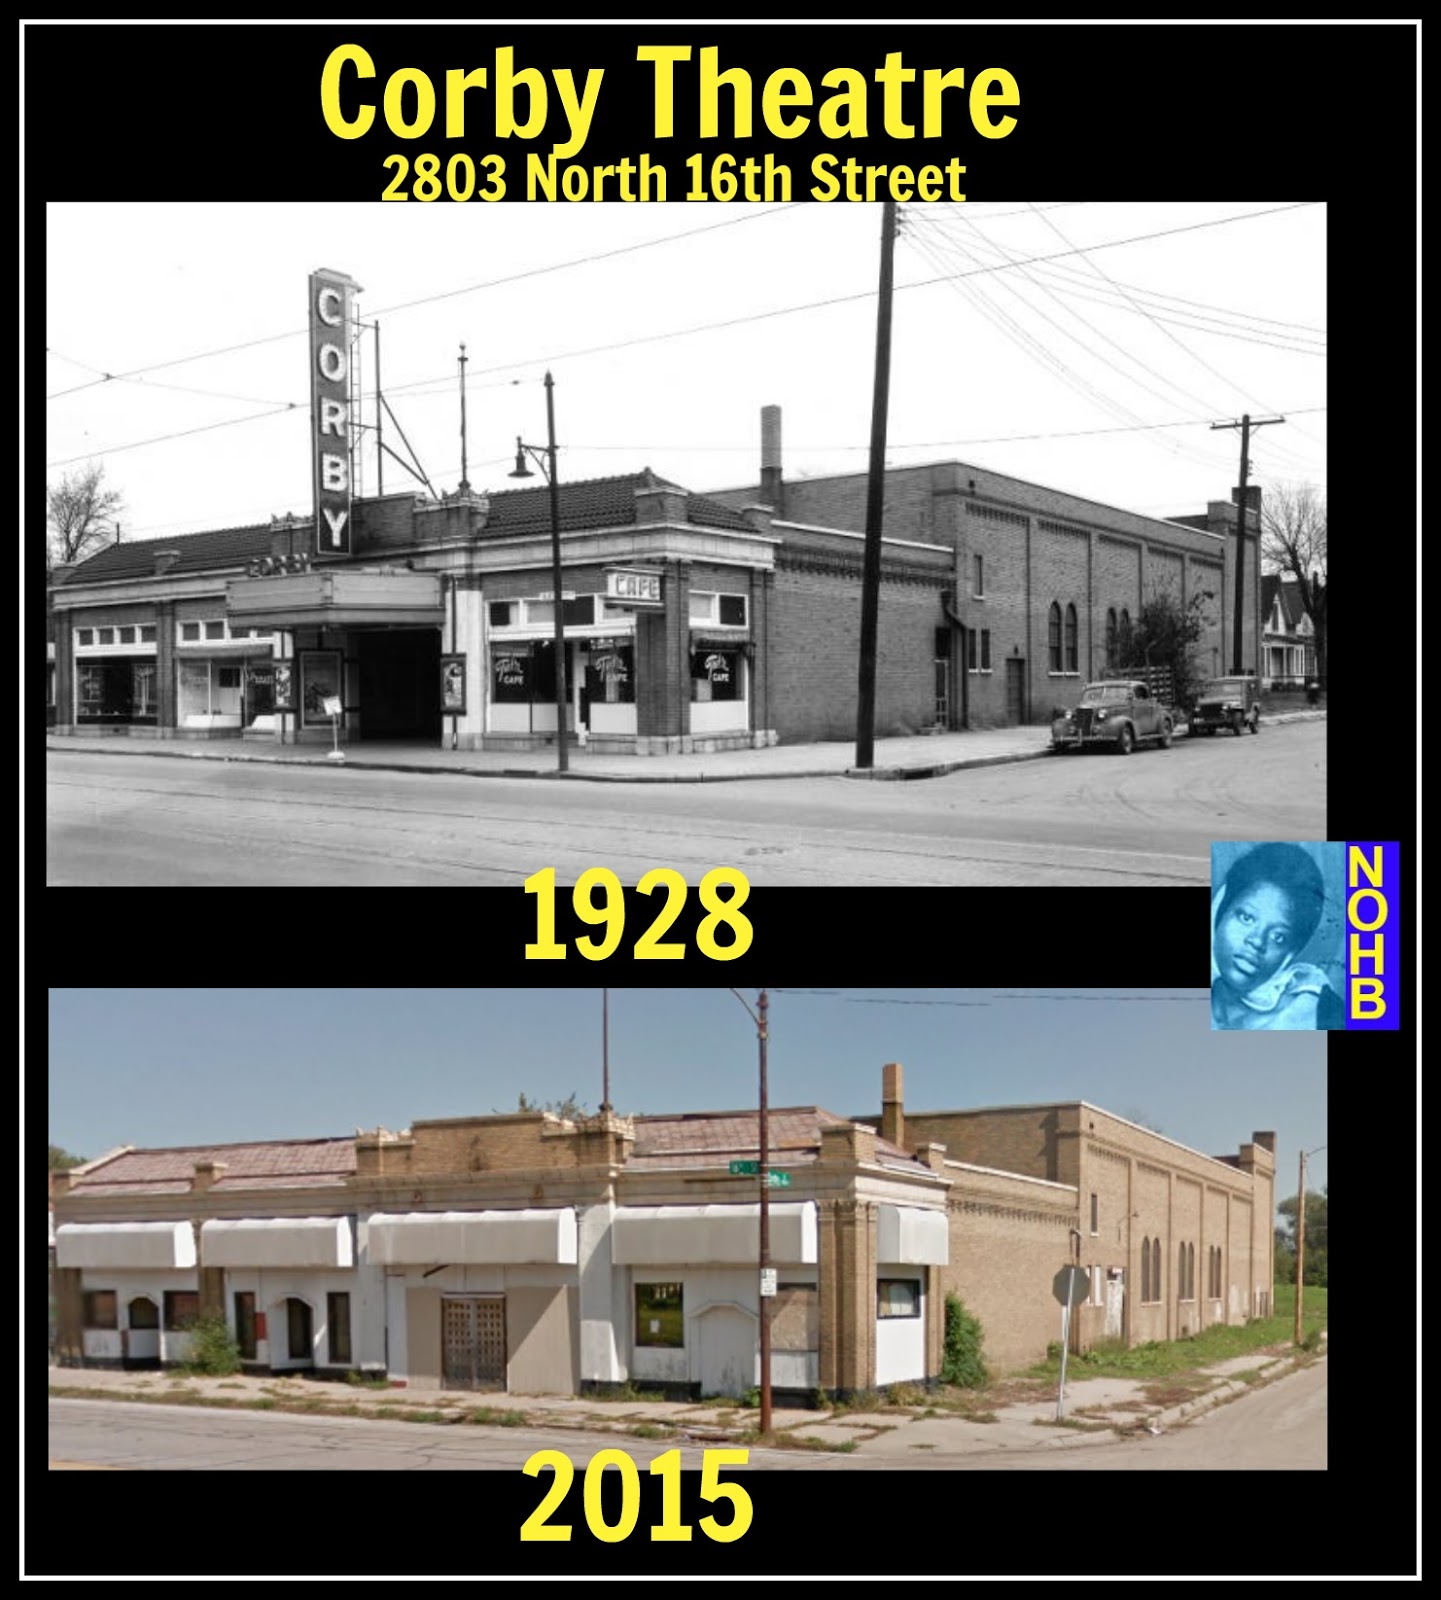 Corby Theater, 2803 North 16th Street, North Omaha, Nebraska